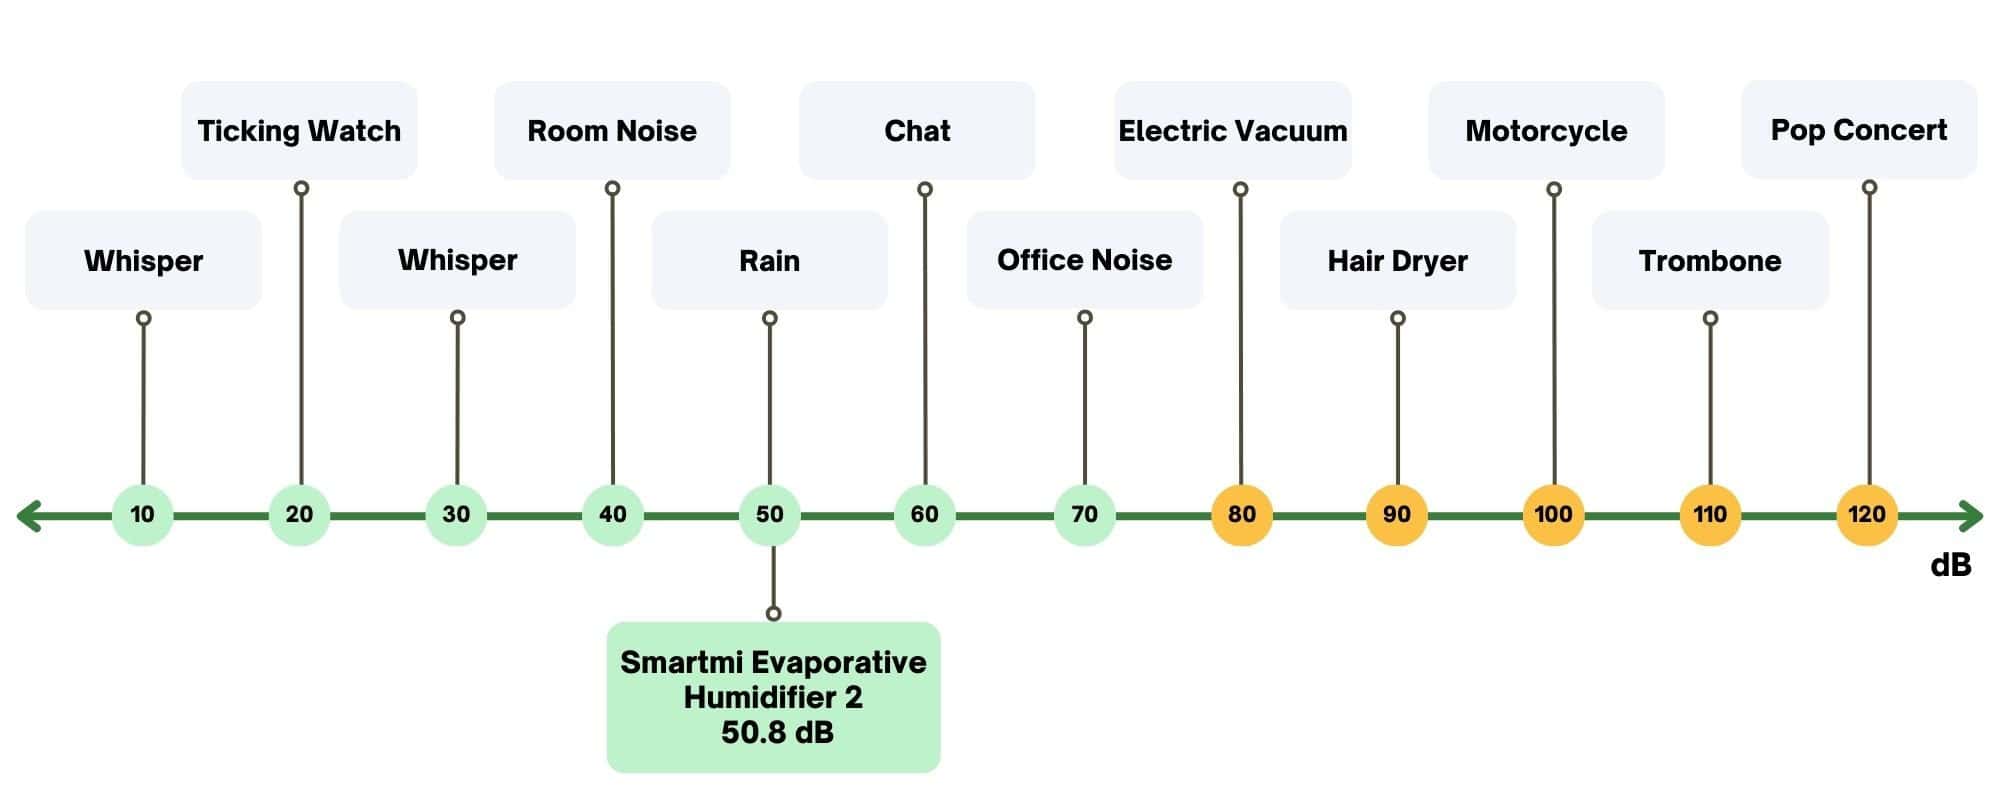 Smartmi Evaporative Humidifier 2 noise level